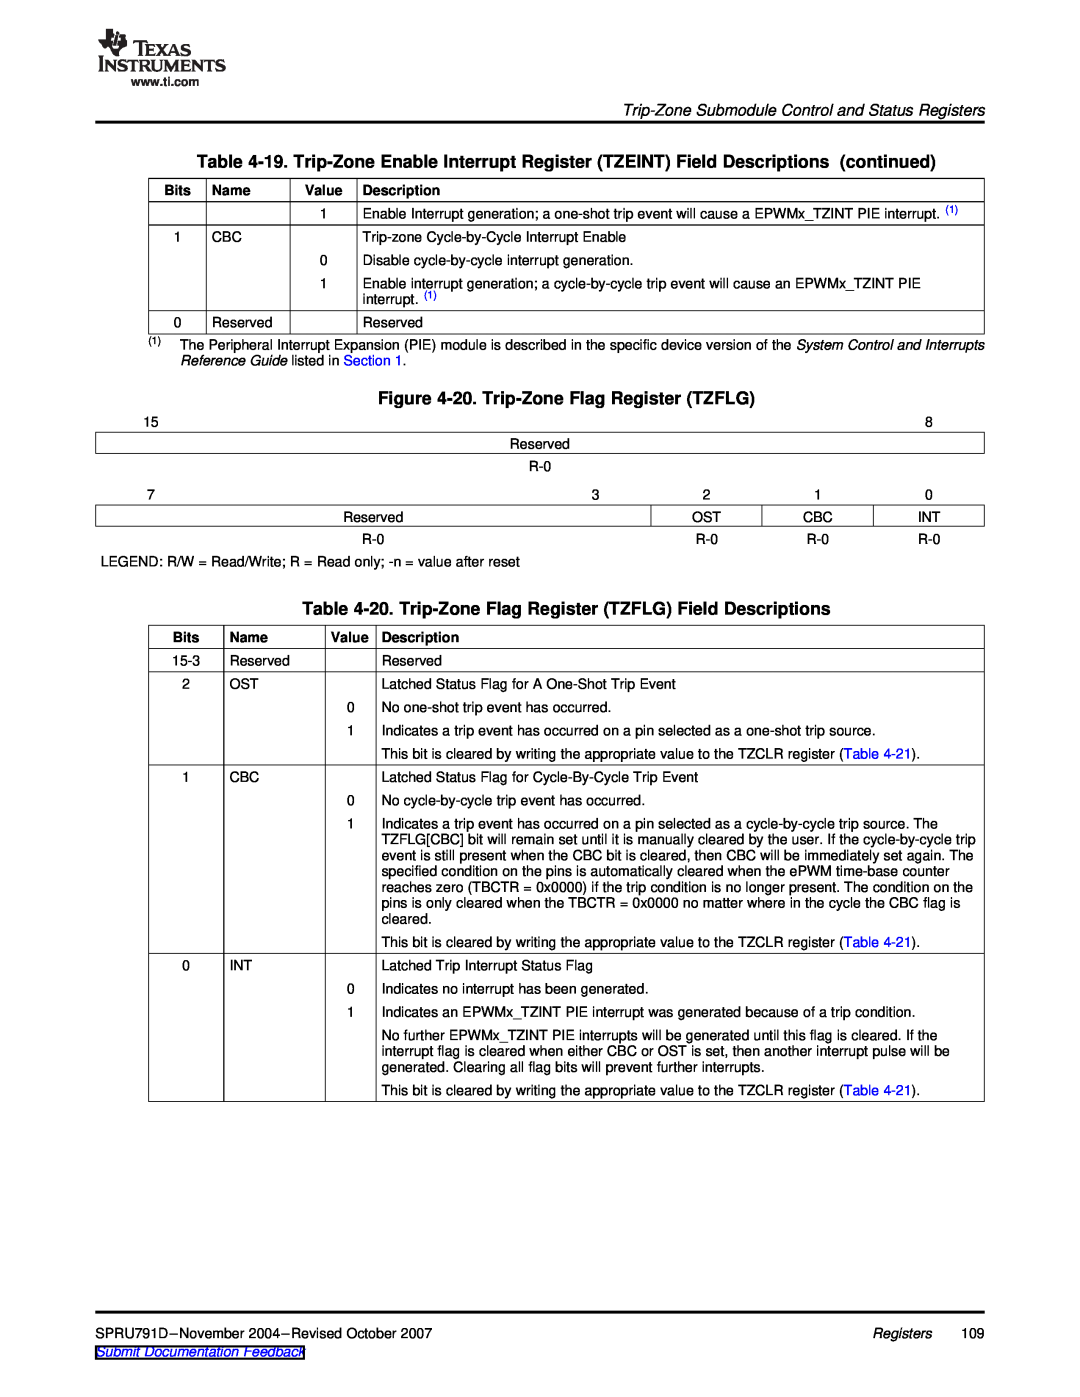 Texas Instruments 28xxx manual 20. Trip-Zone Flag Register TZFLG Field Descriptions, Submit Documentation Feedback 